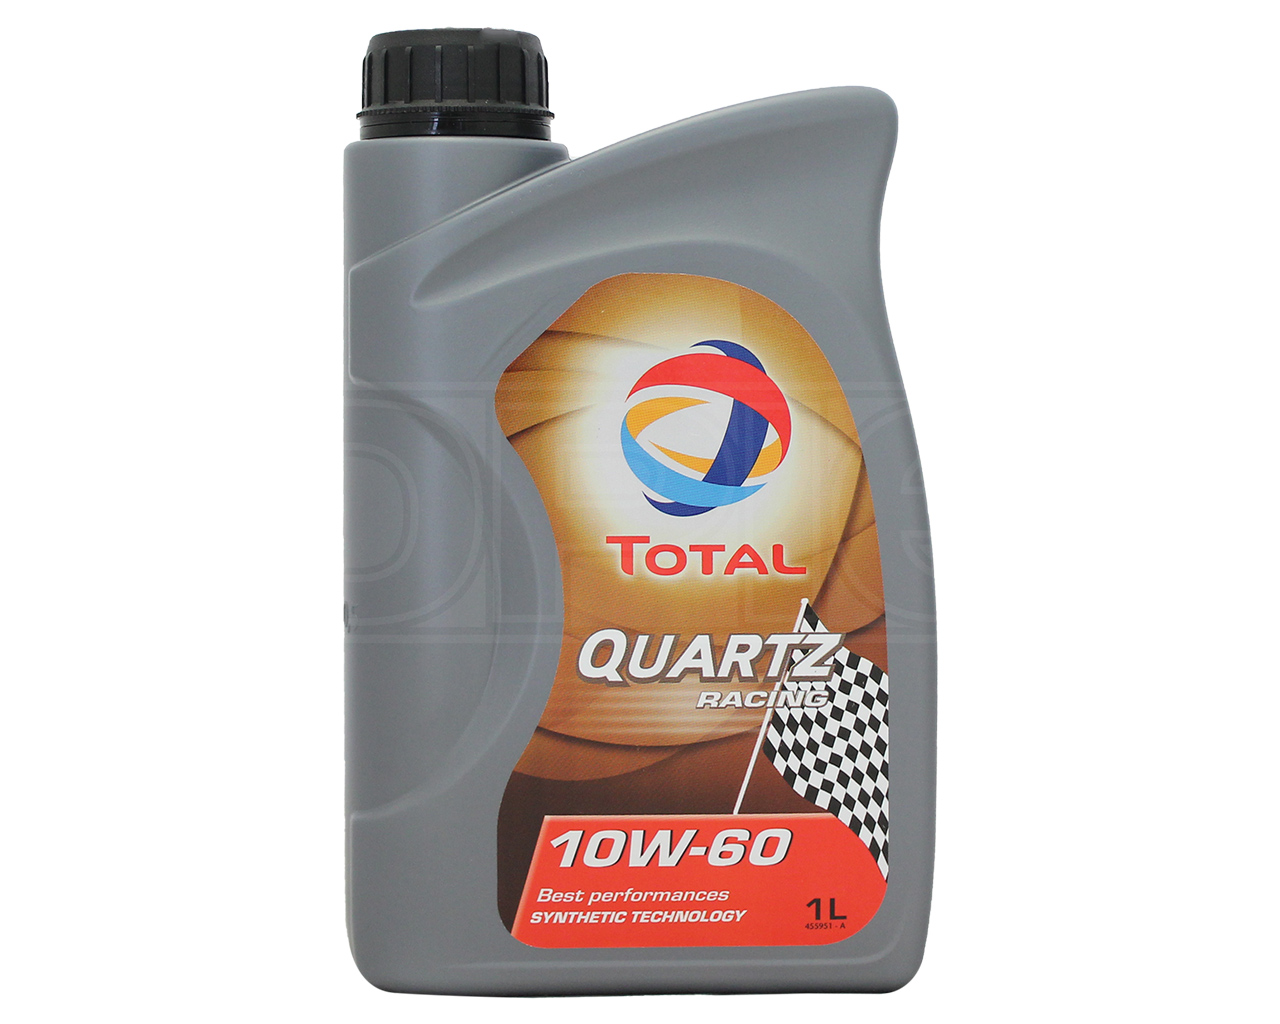 total-quartz-racing-10w-60-engine-oil-1-litre-1.jpg